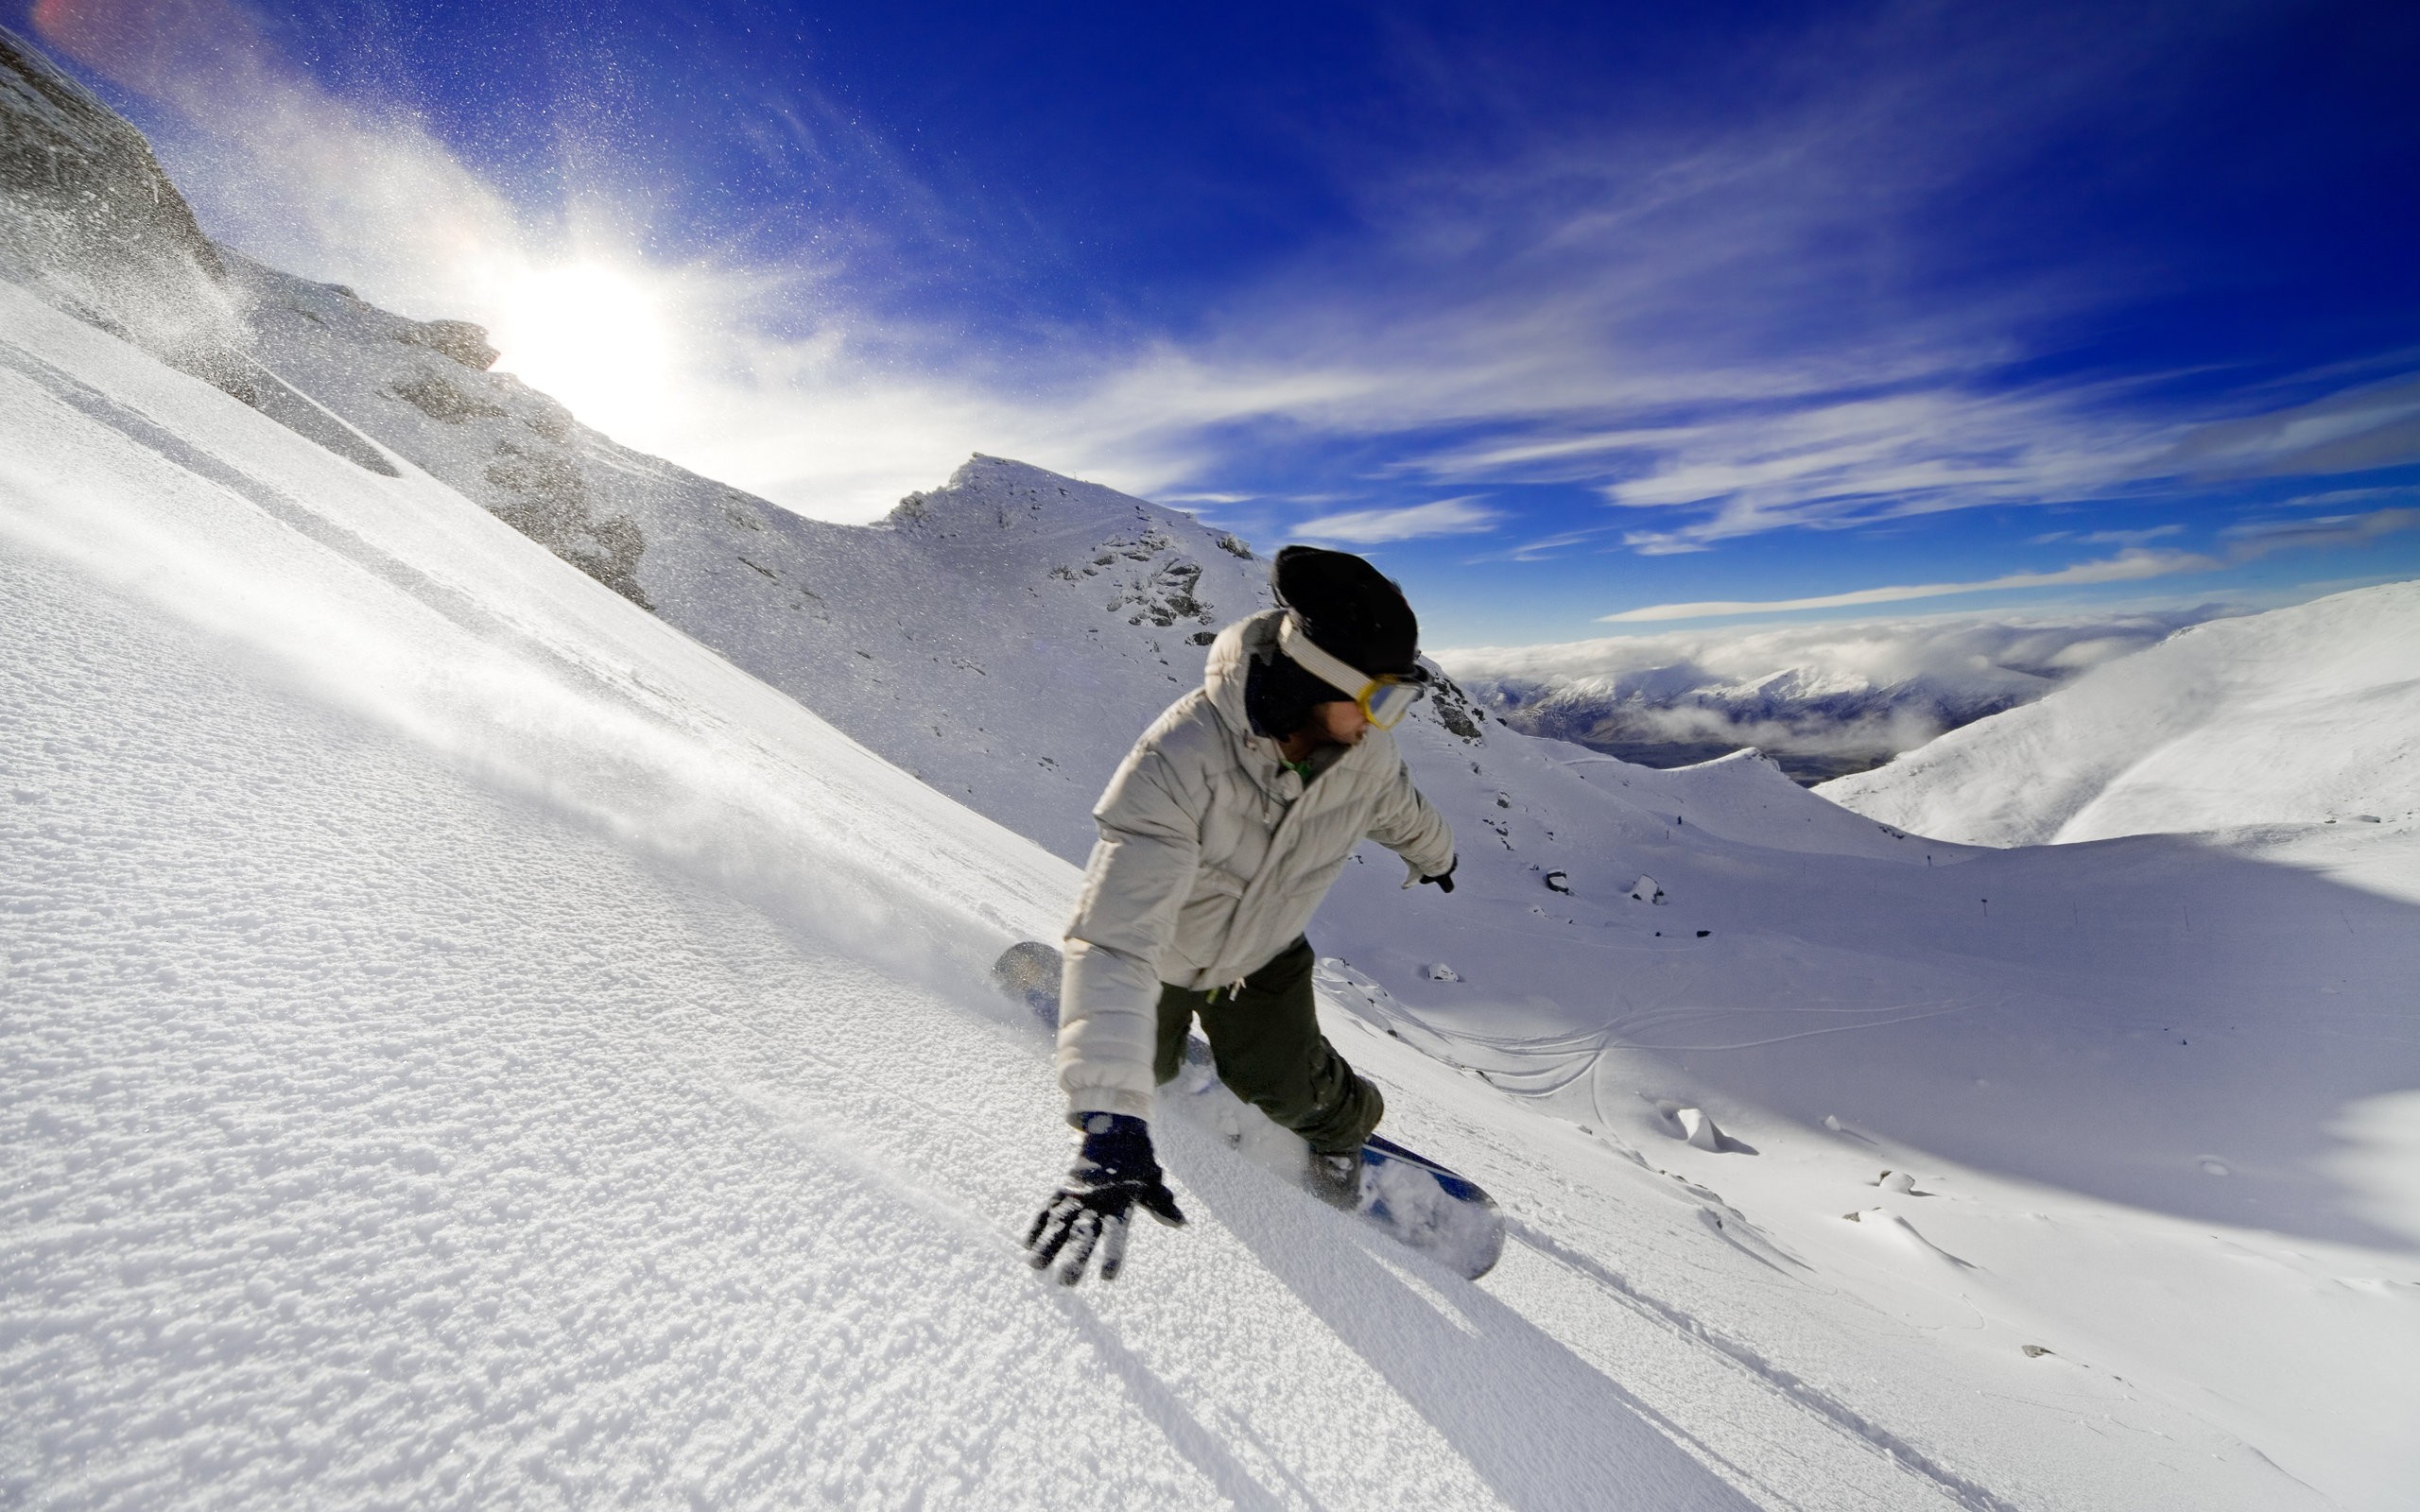 Descarga gratuita de fondo de pantalla para móvil de Snowboard, Deporte.